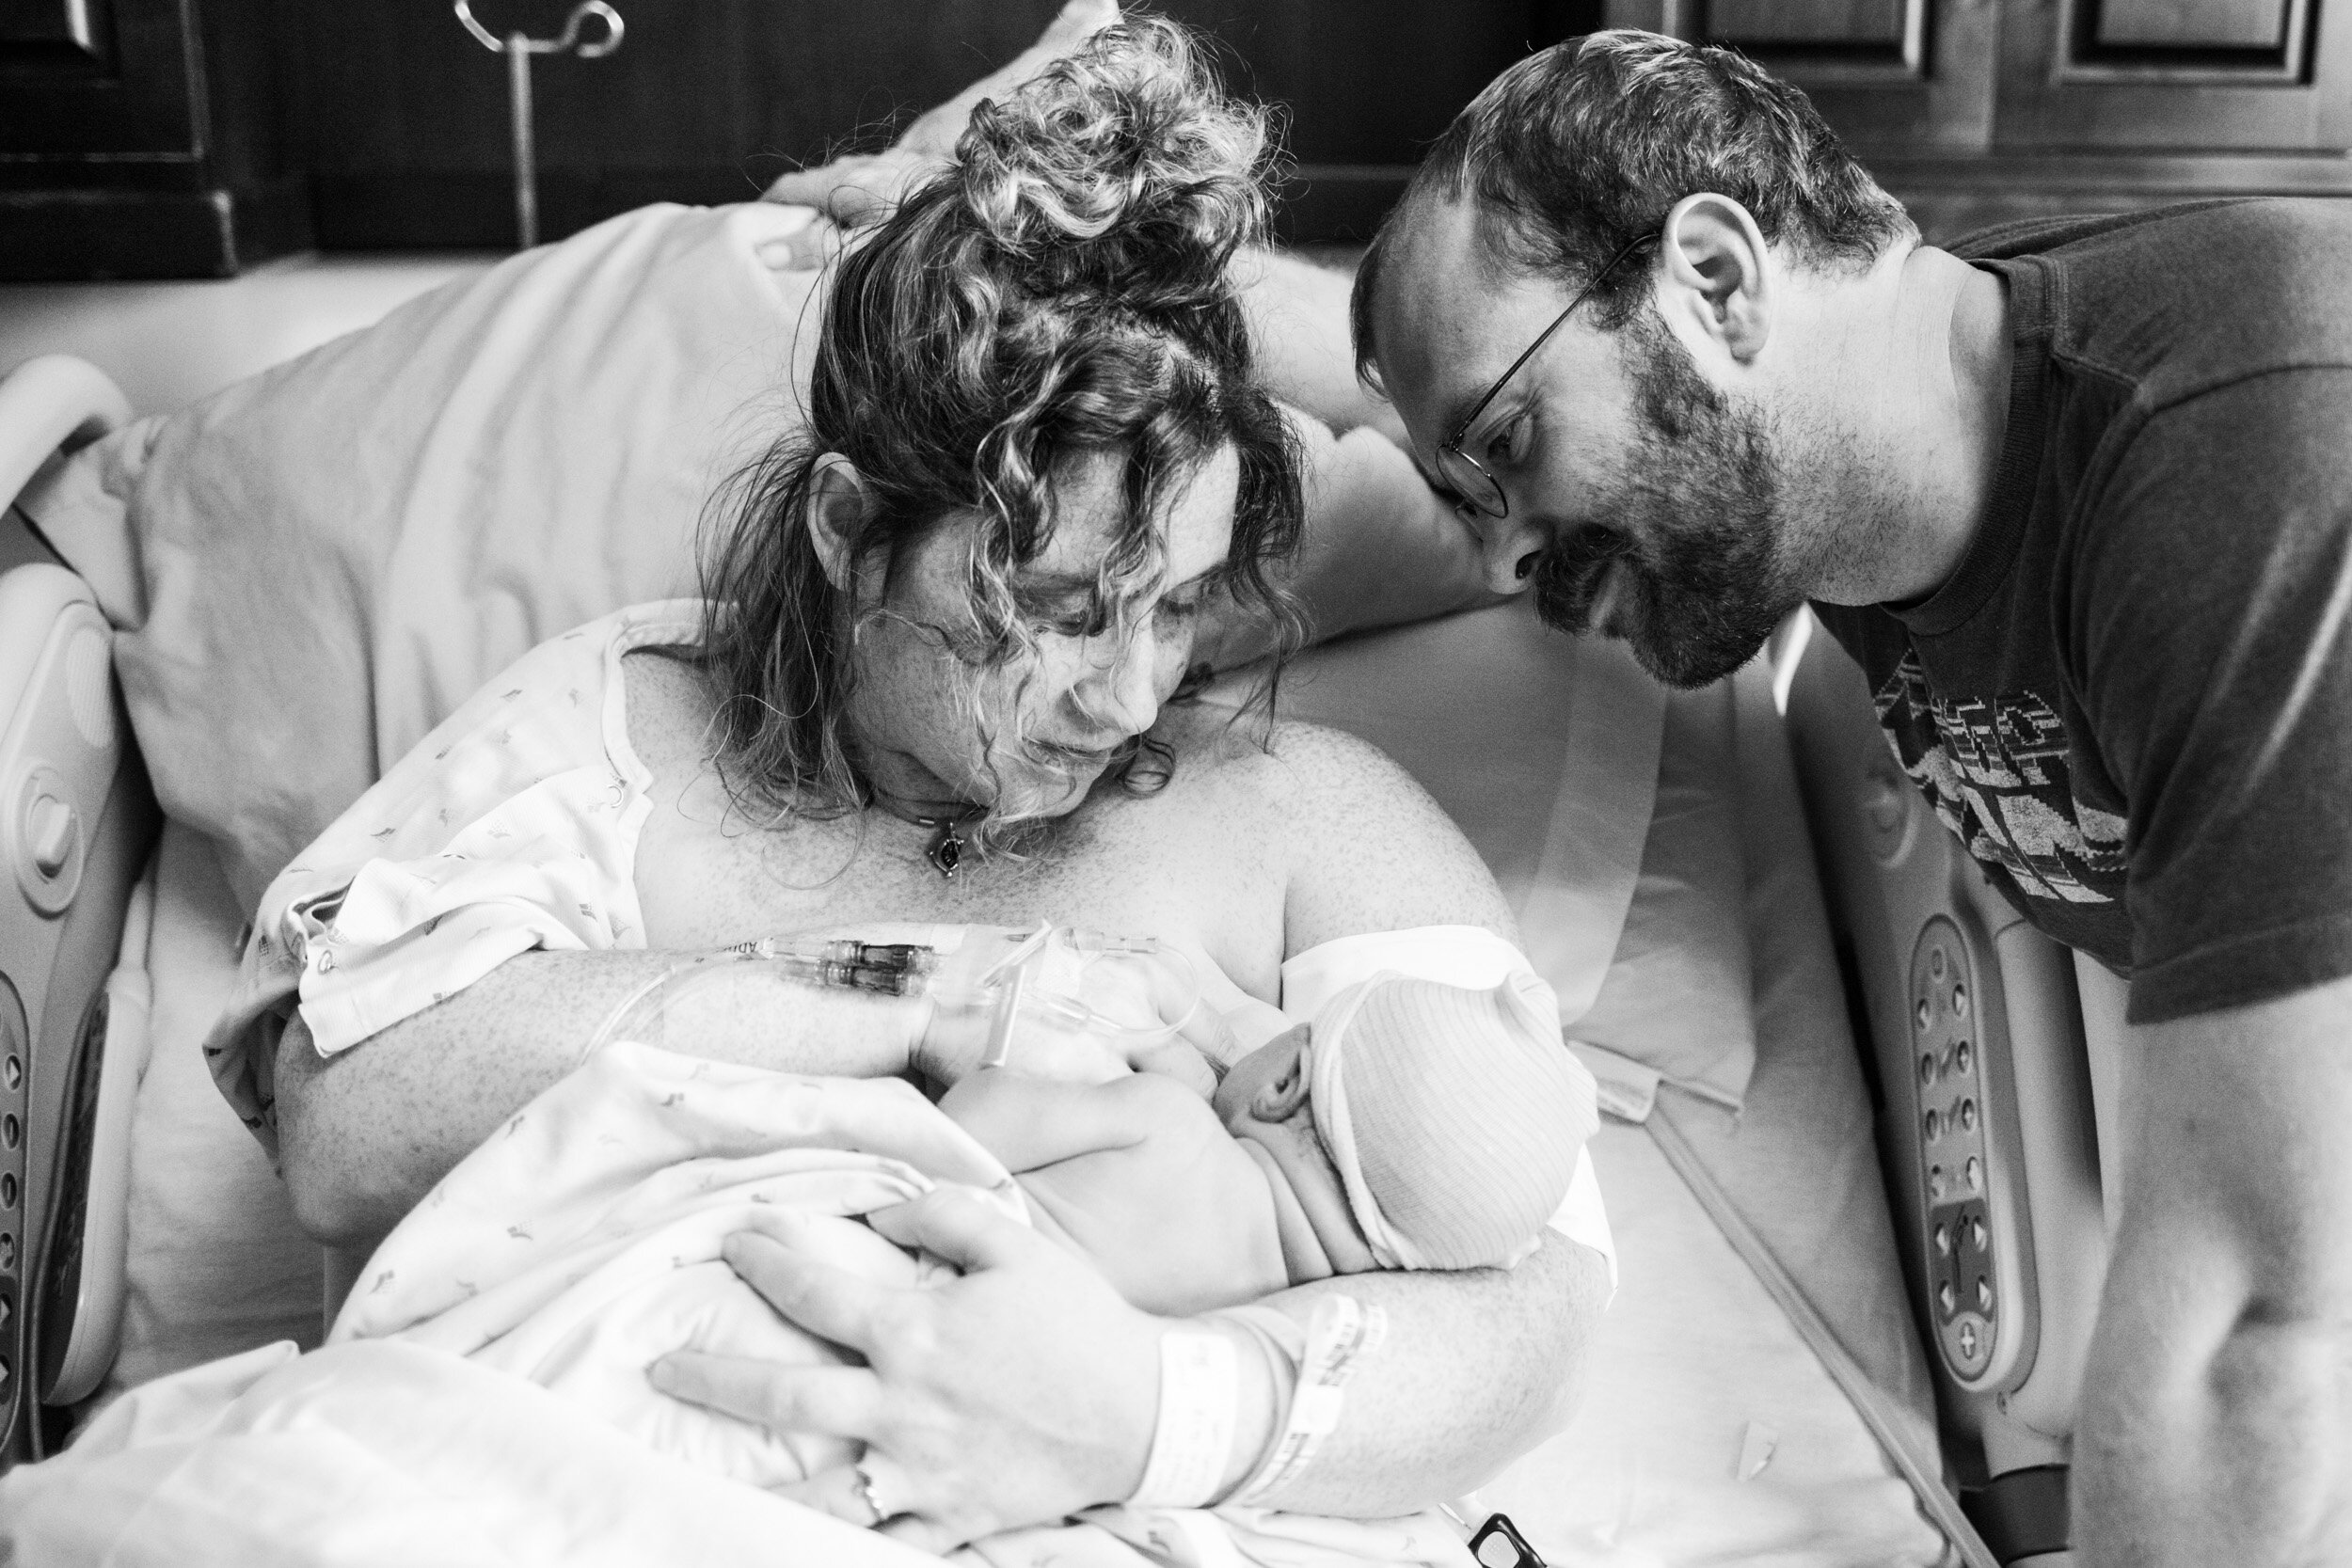 jacksonville parents admiring their newborn baby just after birth